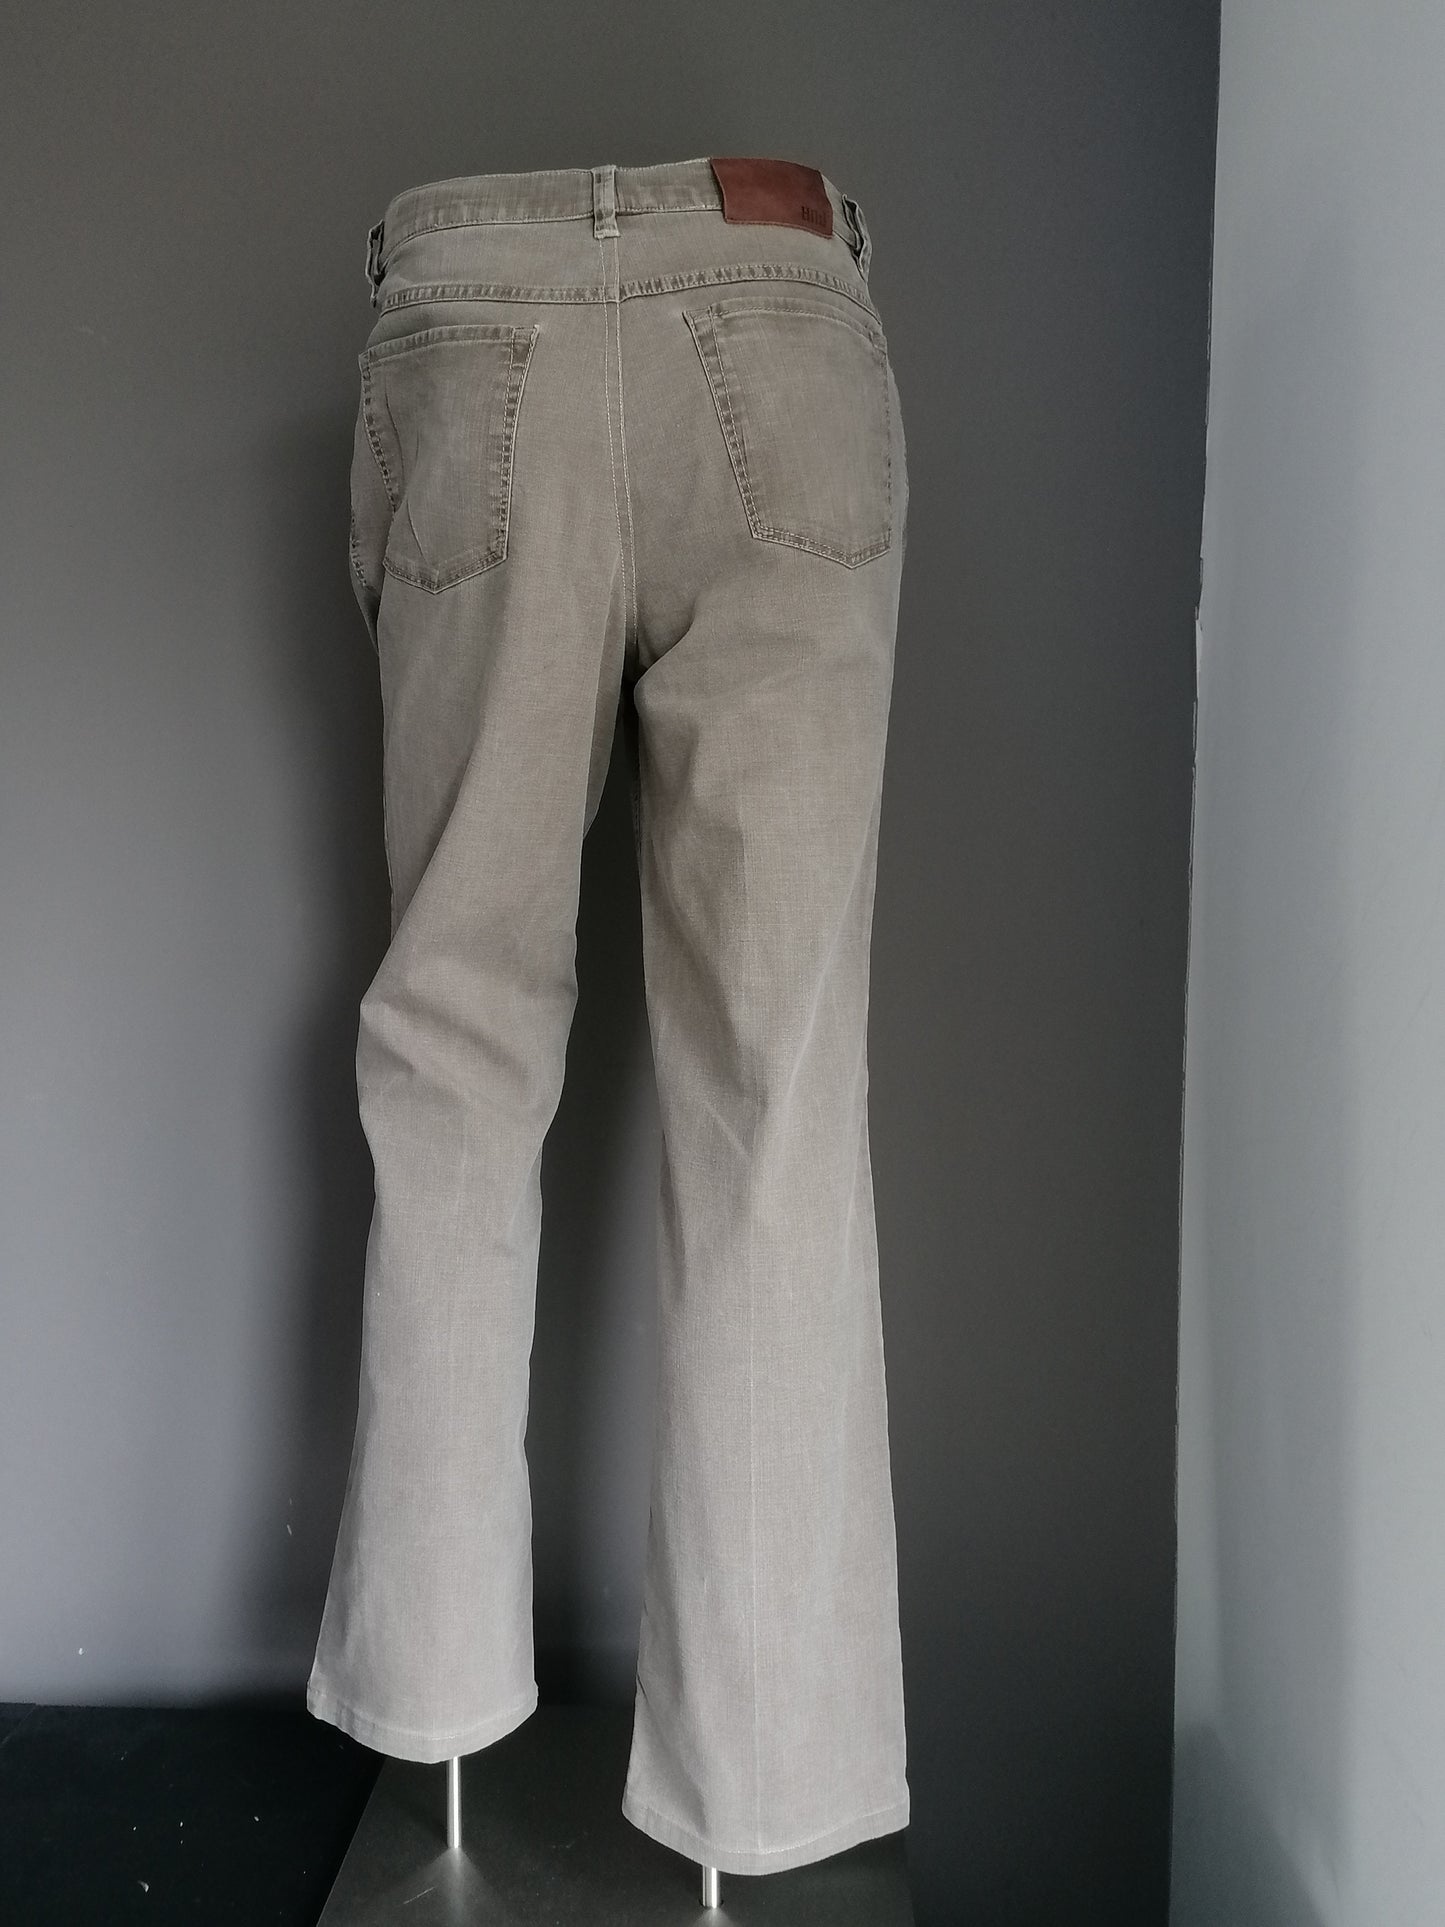 Pantalones Hiltl. Motivo marrón claro. Tamaño 54 / L. Tipo ZE500. Estirar.